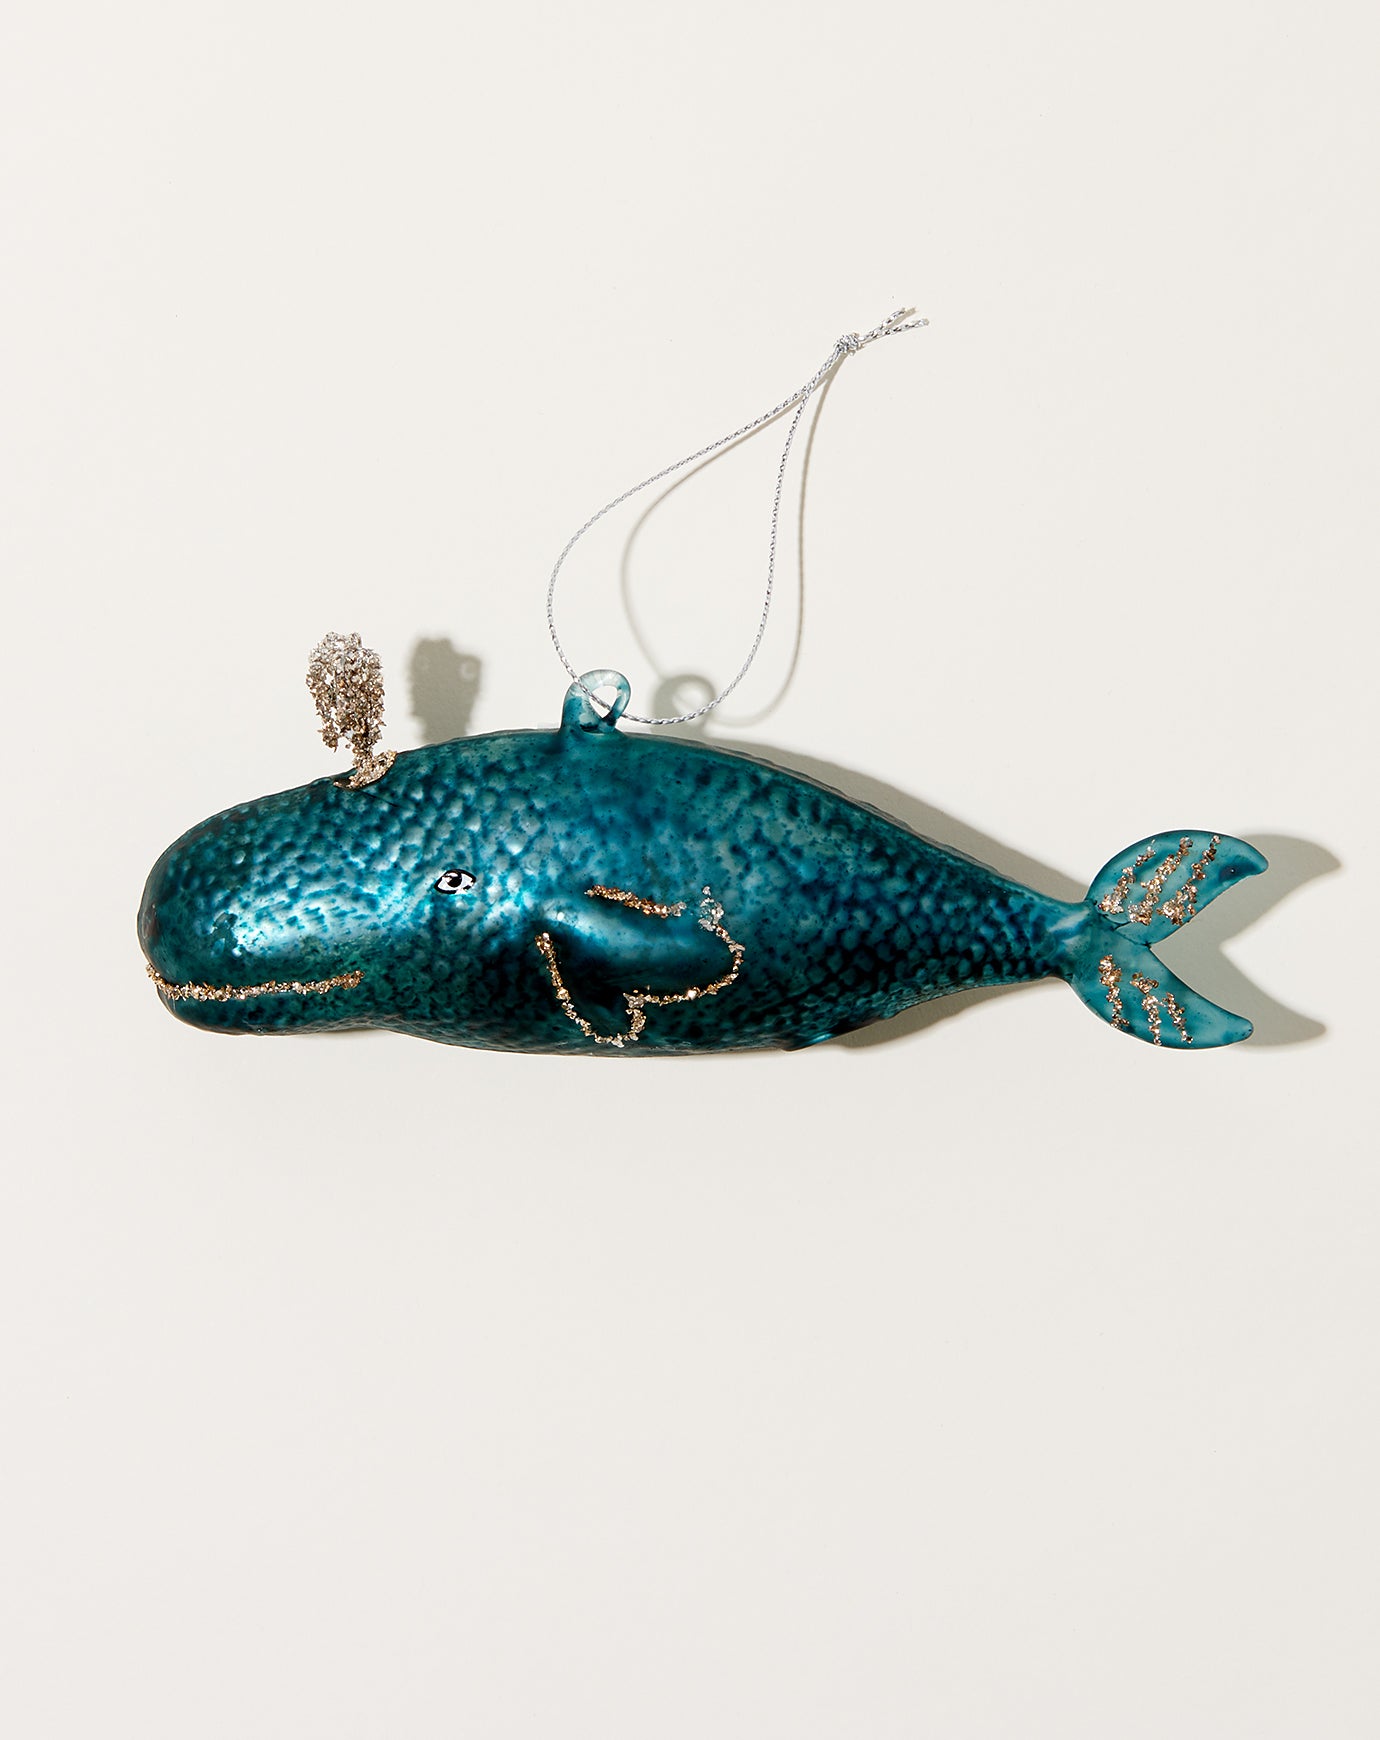 Cody Foster Victorian Whale Ornament in Dark Blue